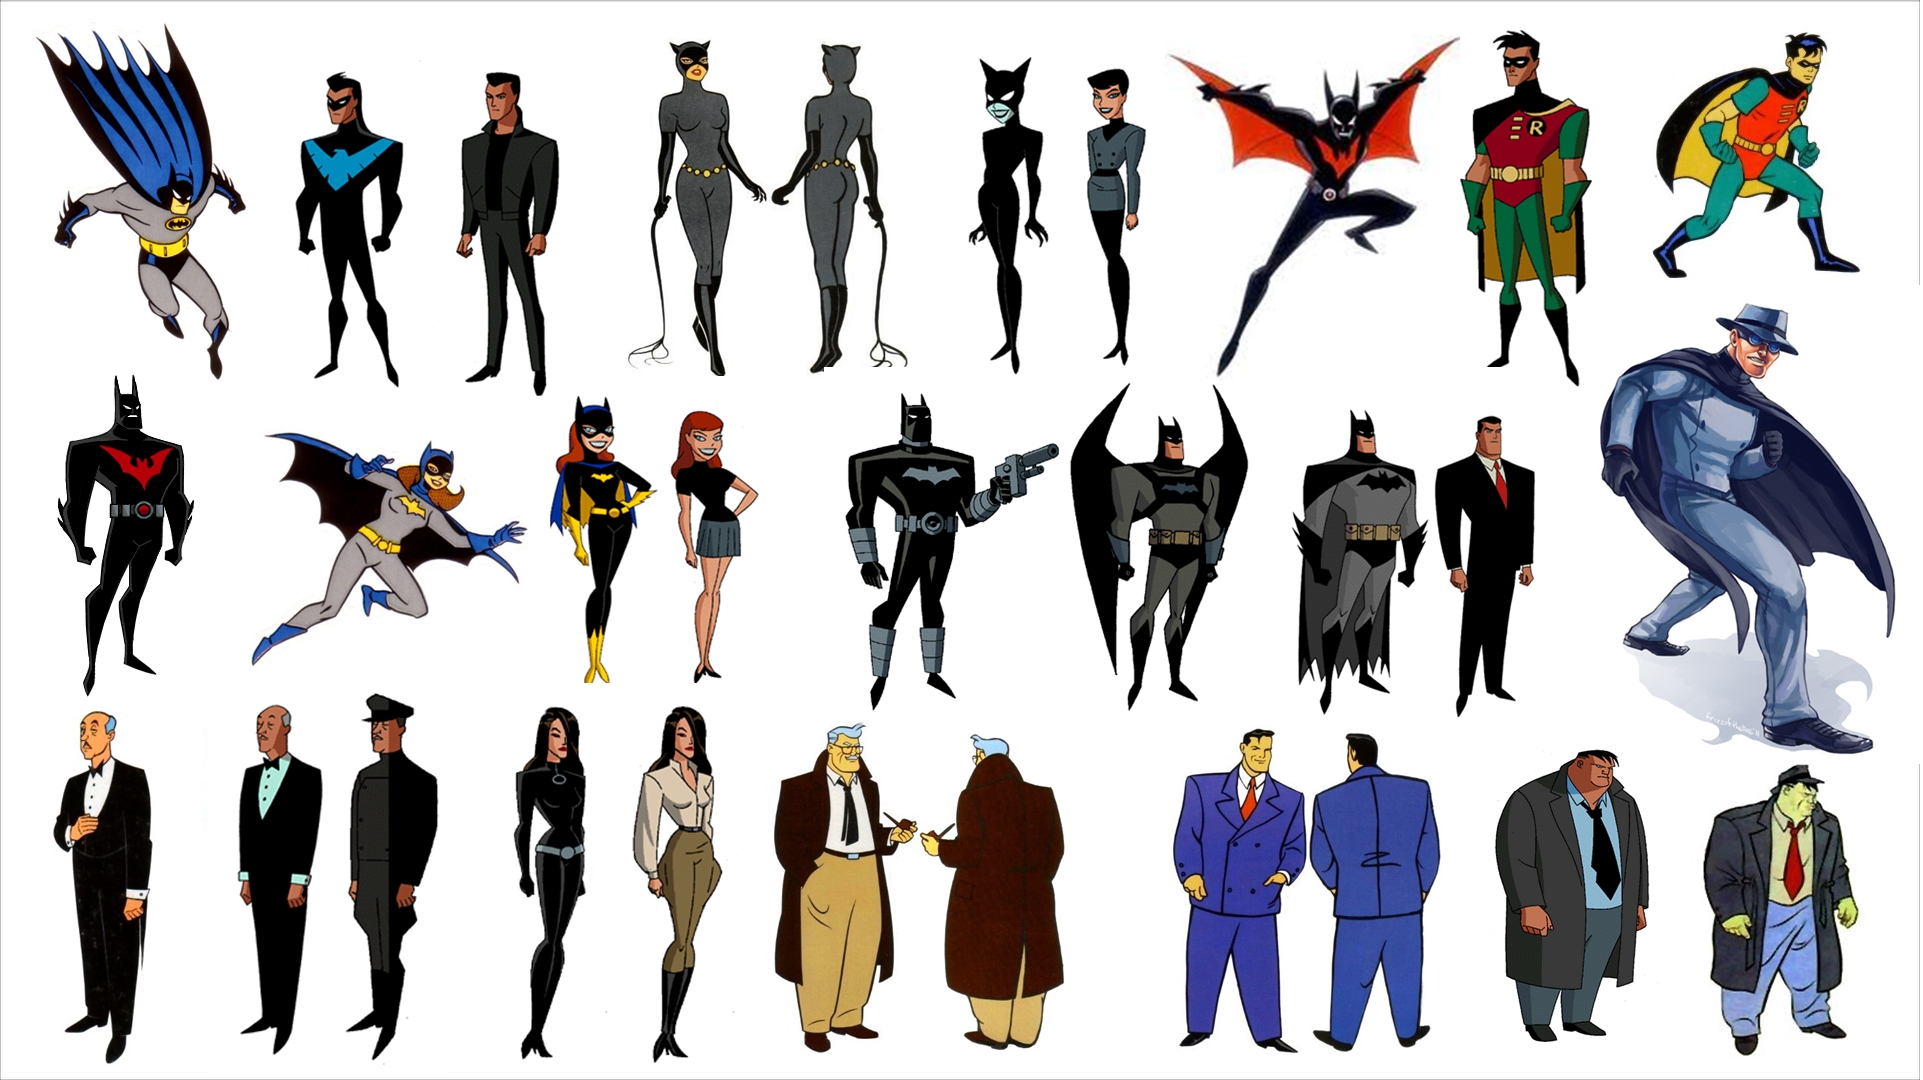 Batman Animated Series drawing free image download